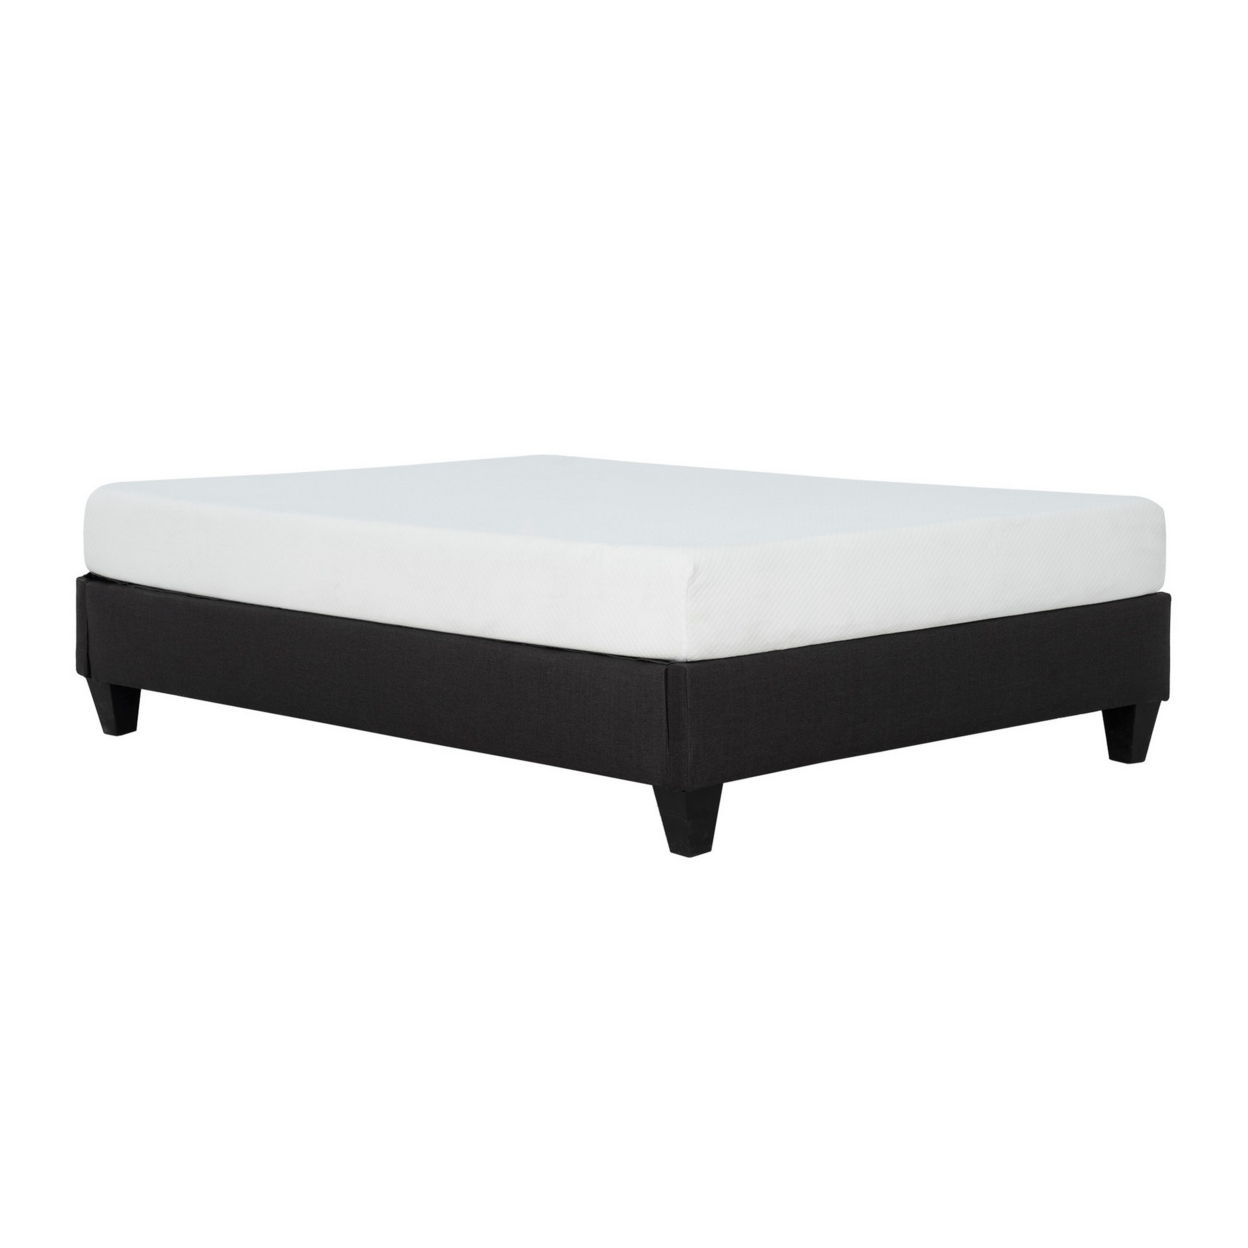 Cleo King Size Bed Frame, Solid Wood, Soft Dark Gray Linen Upholstery- Saltoro Sherpi